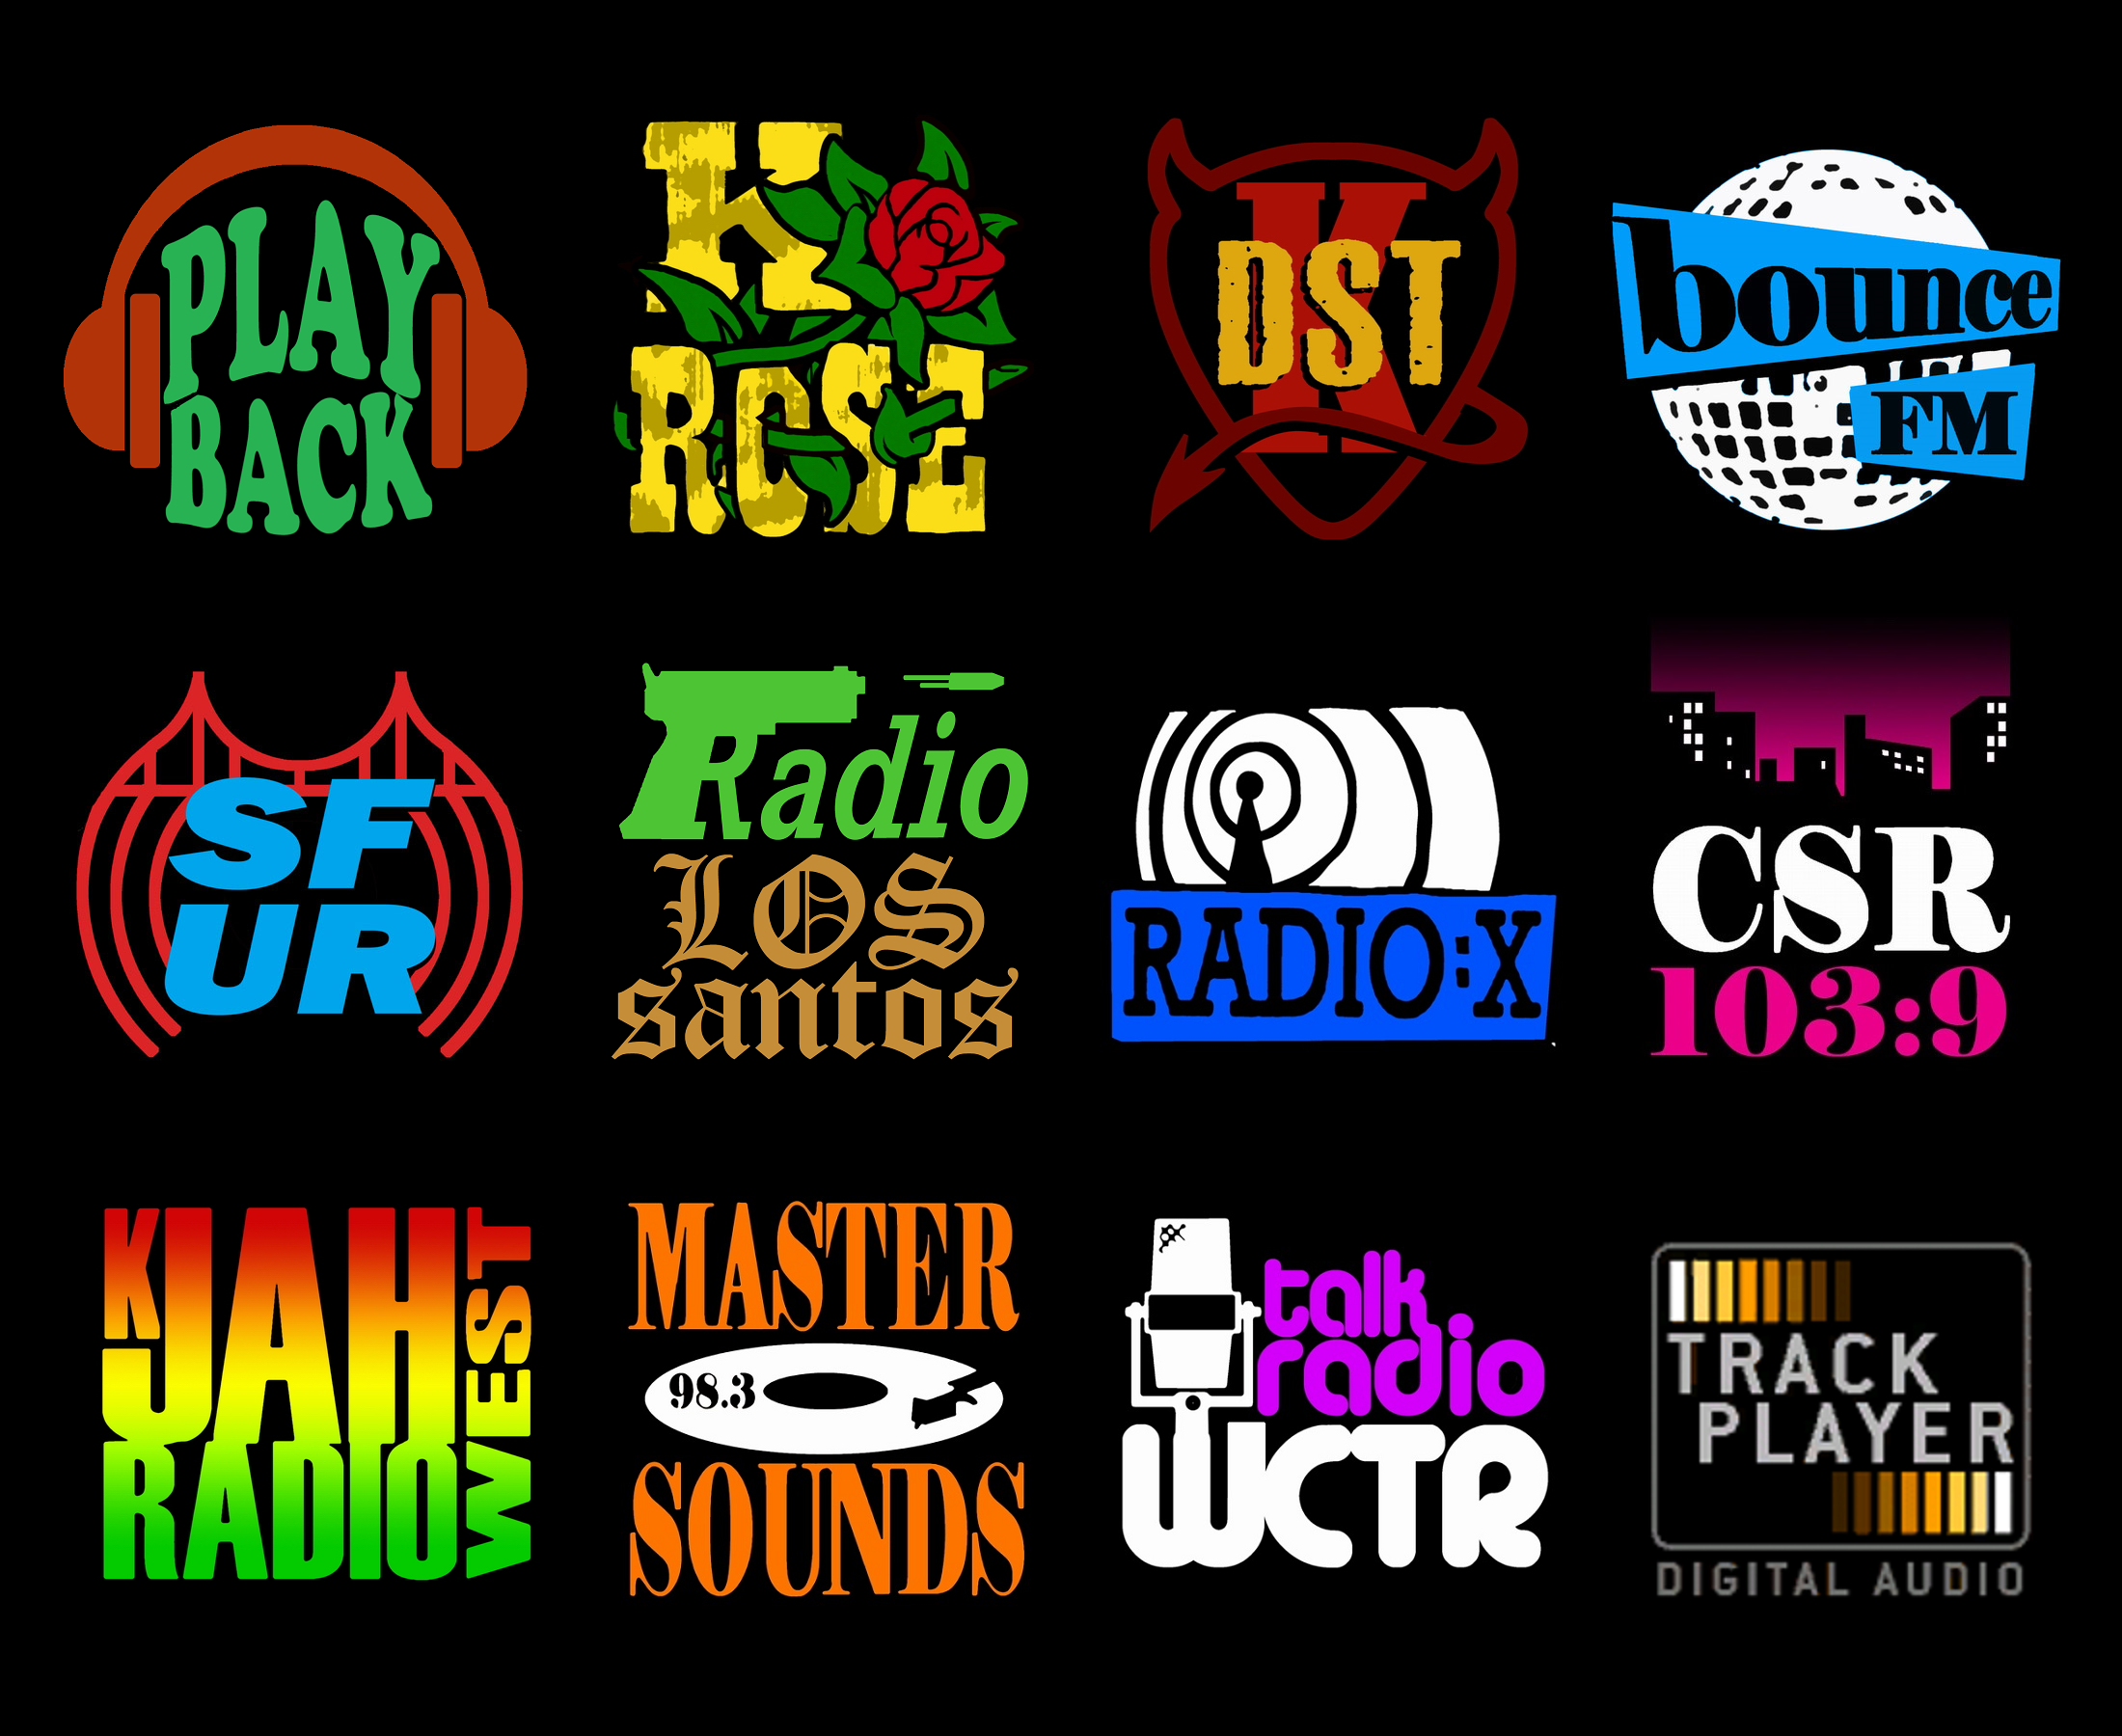 Los Santos Rock Radio #1 - Radio Stations in Grand Theft Auto (podcast)